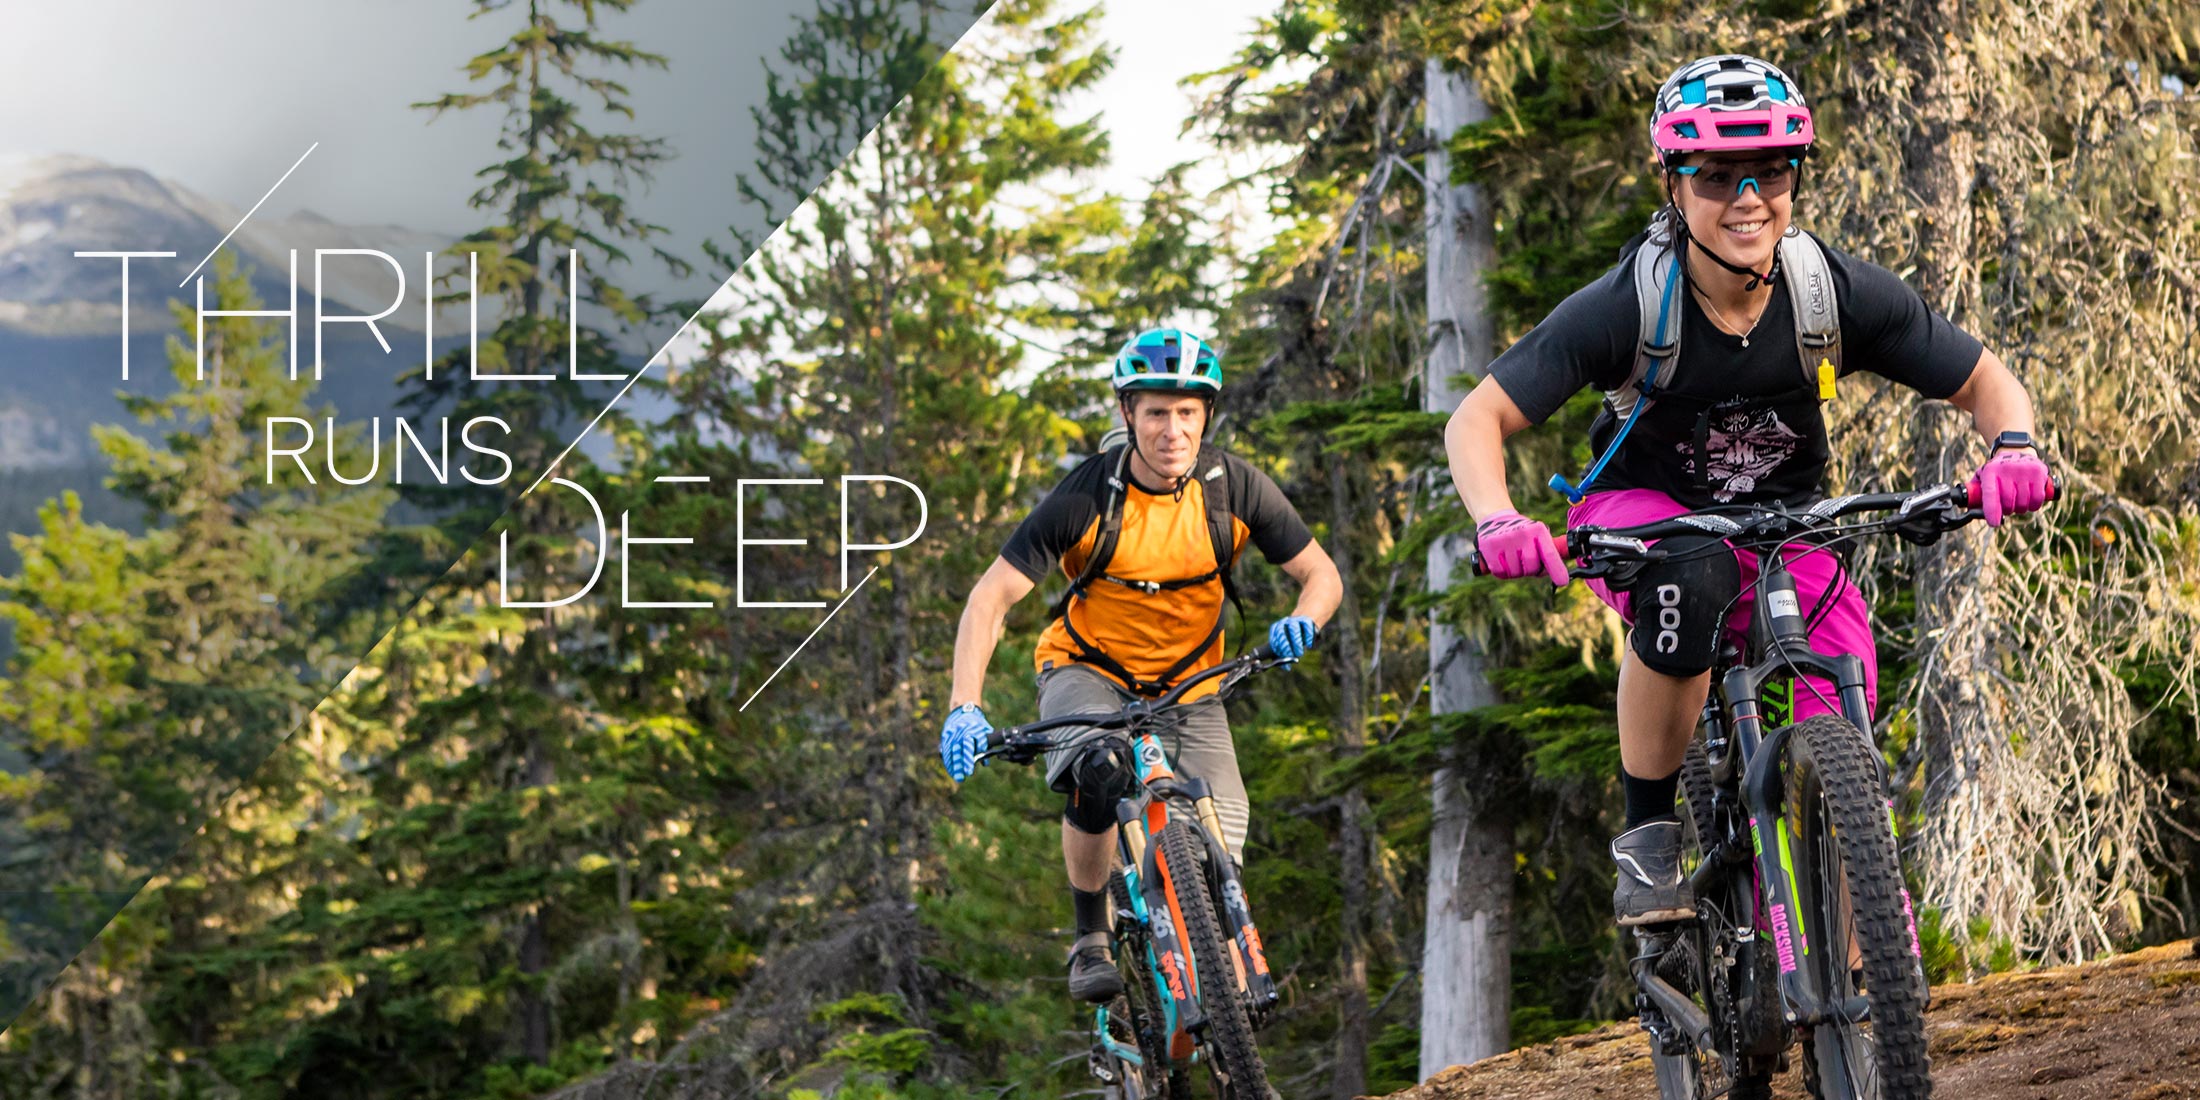 People XC mountain biking in Whistler BC Canada